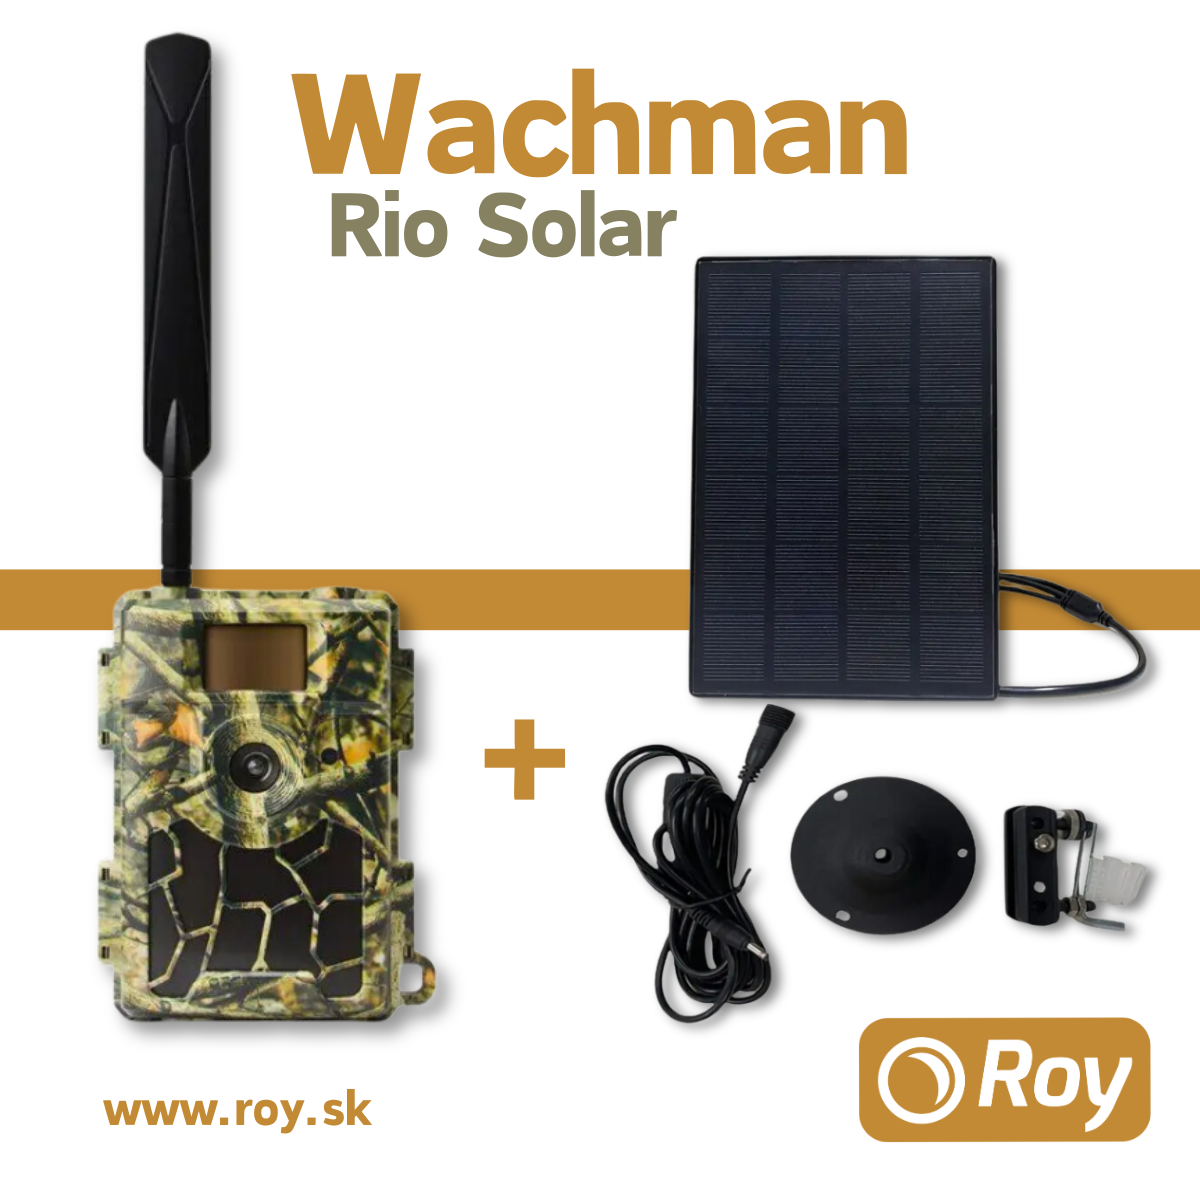 Wachman Rio Solar 4G - foto